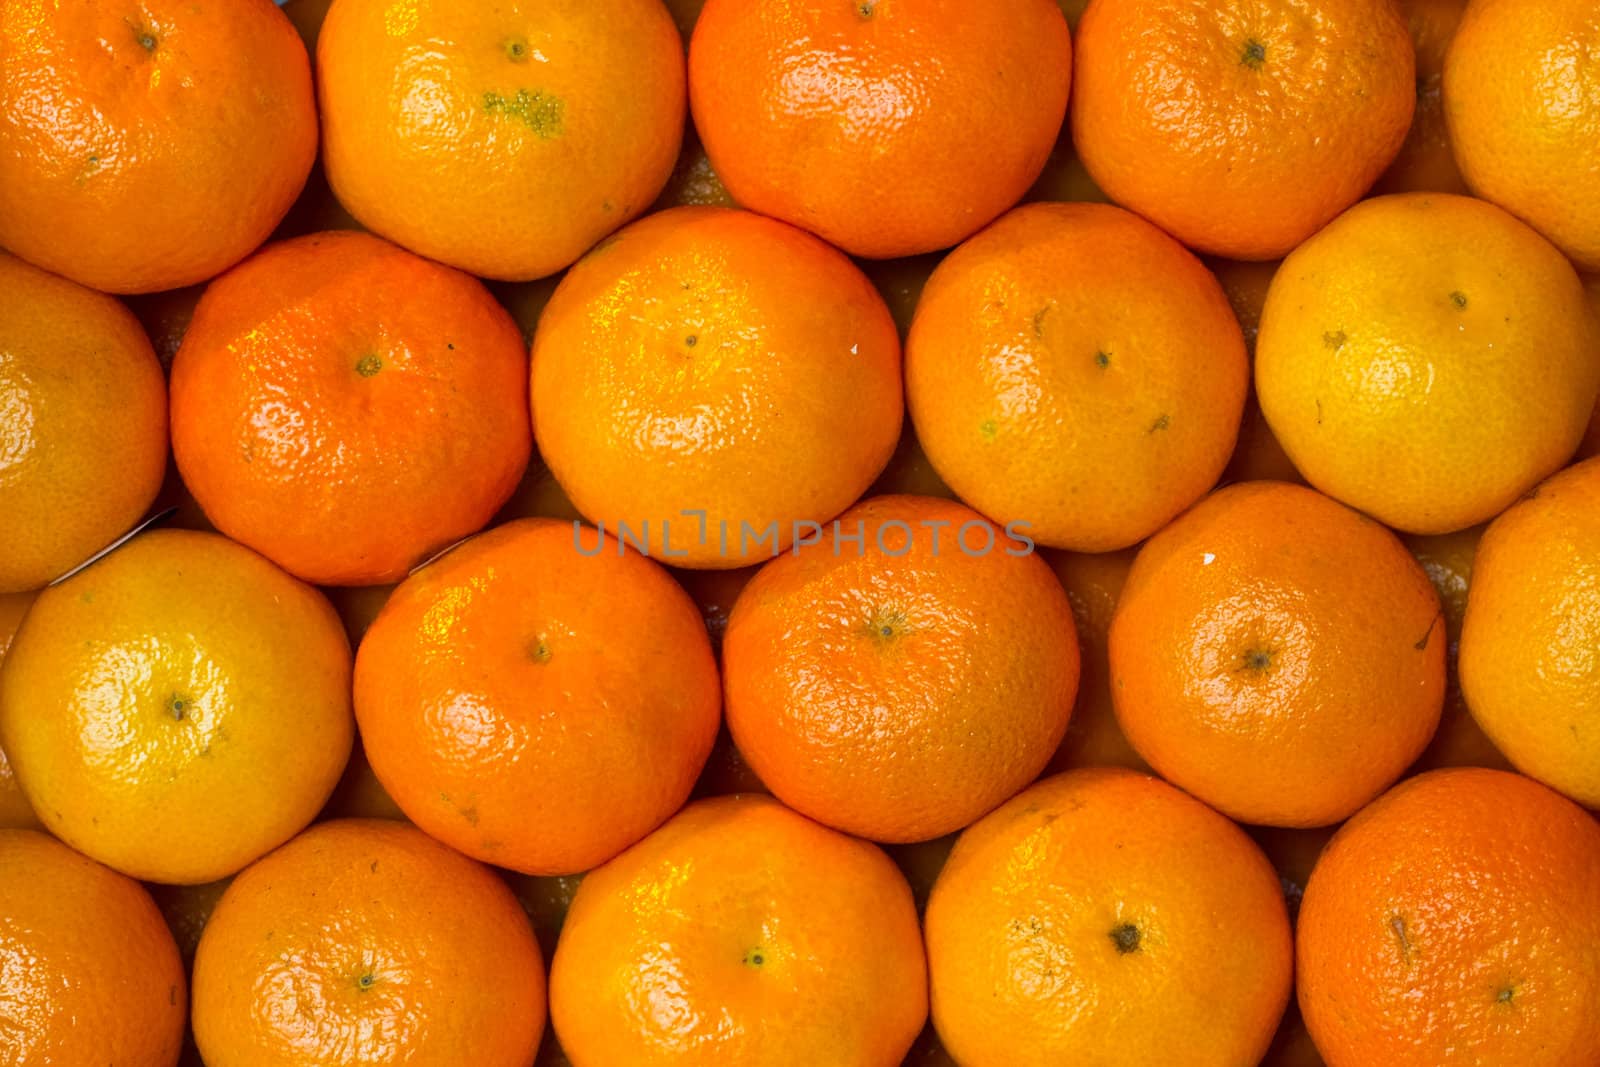 A box of fresh oranges